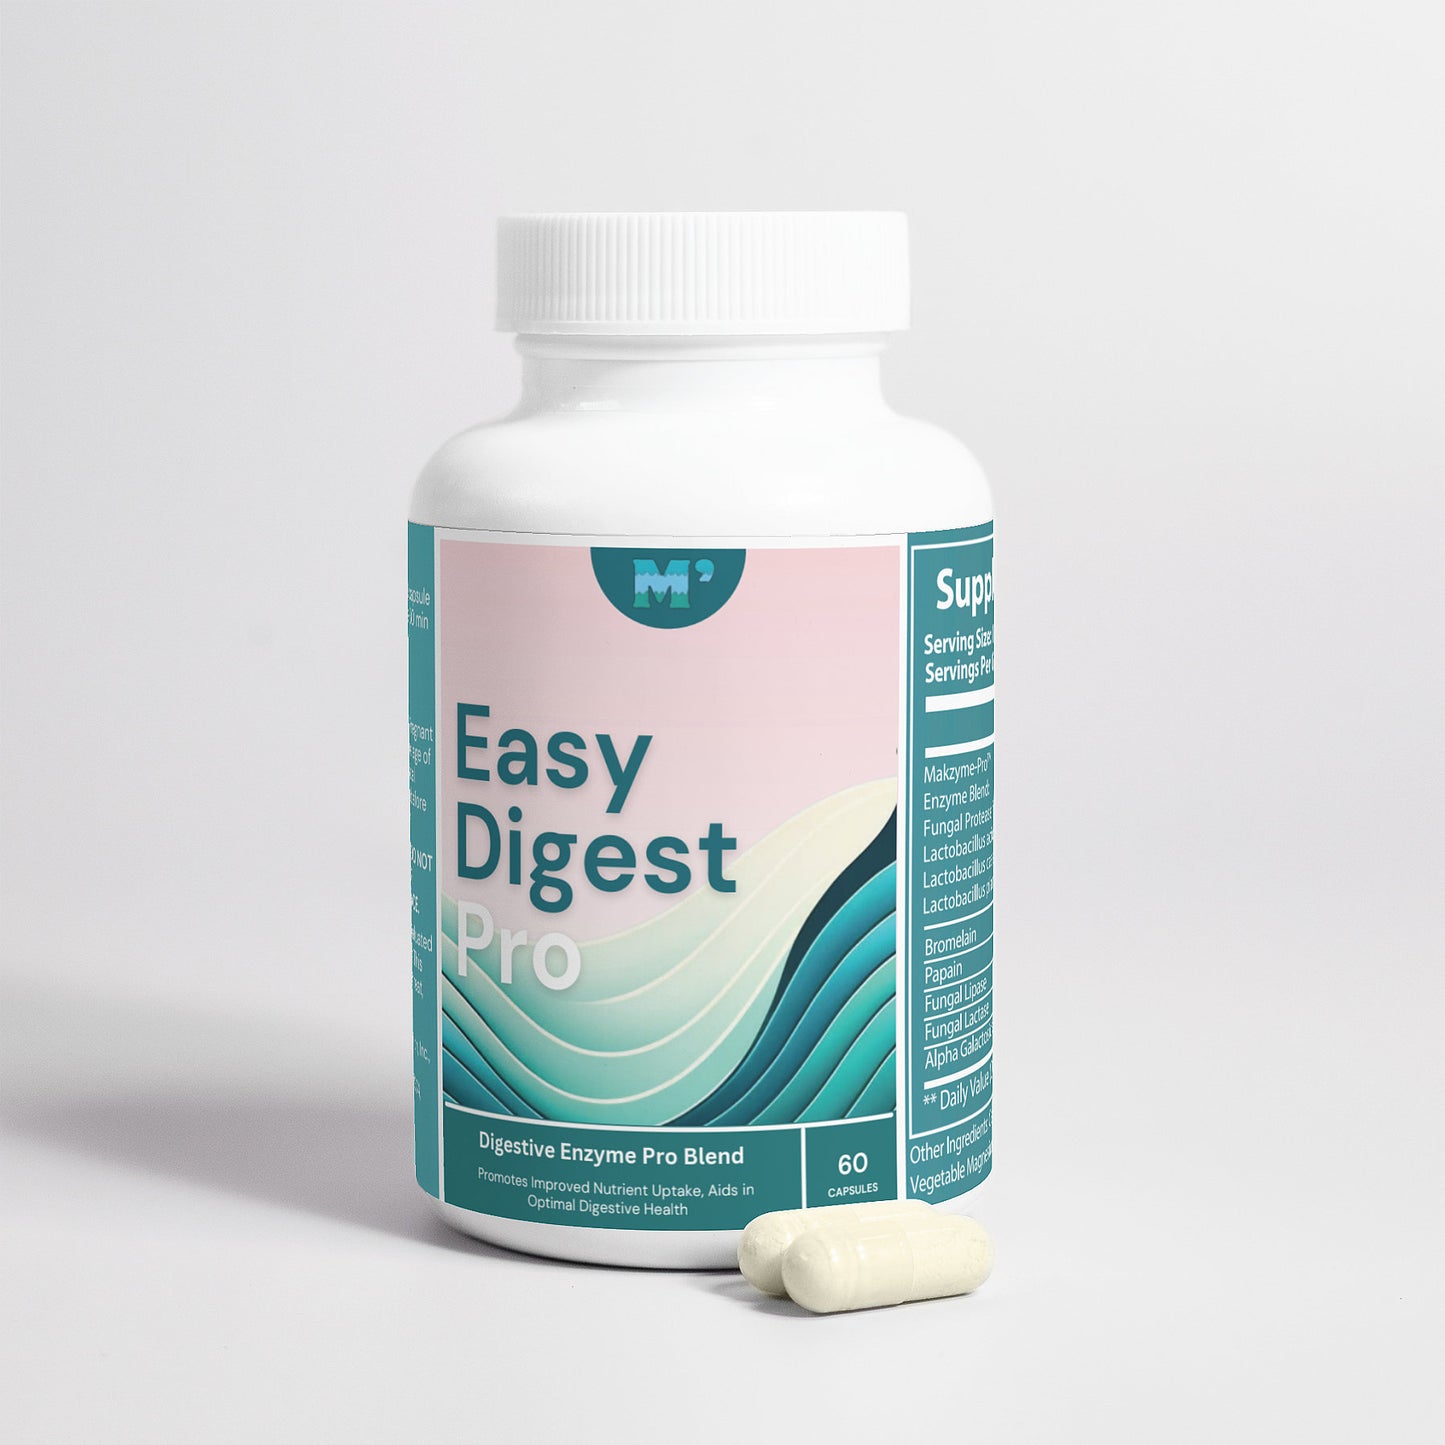 Easy Digest Pro - Digestive Enzyme Pro Blend